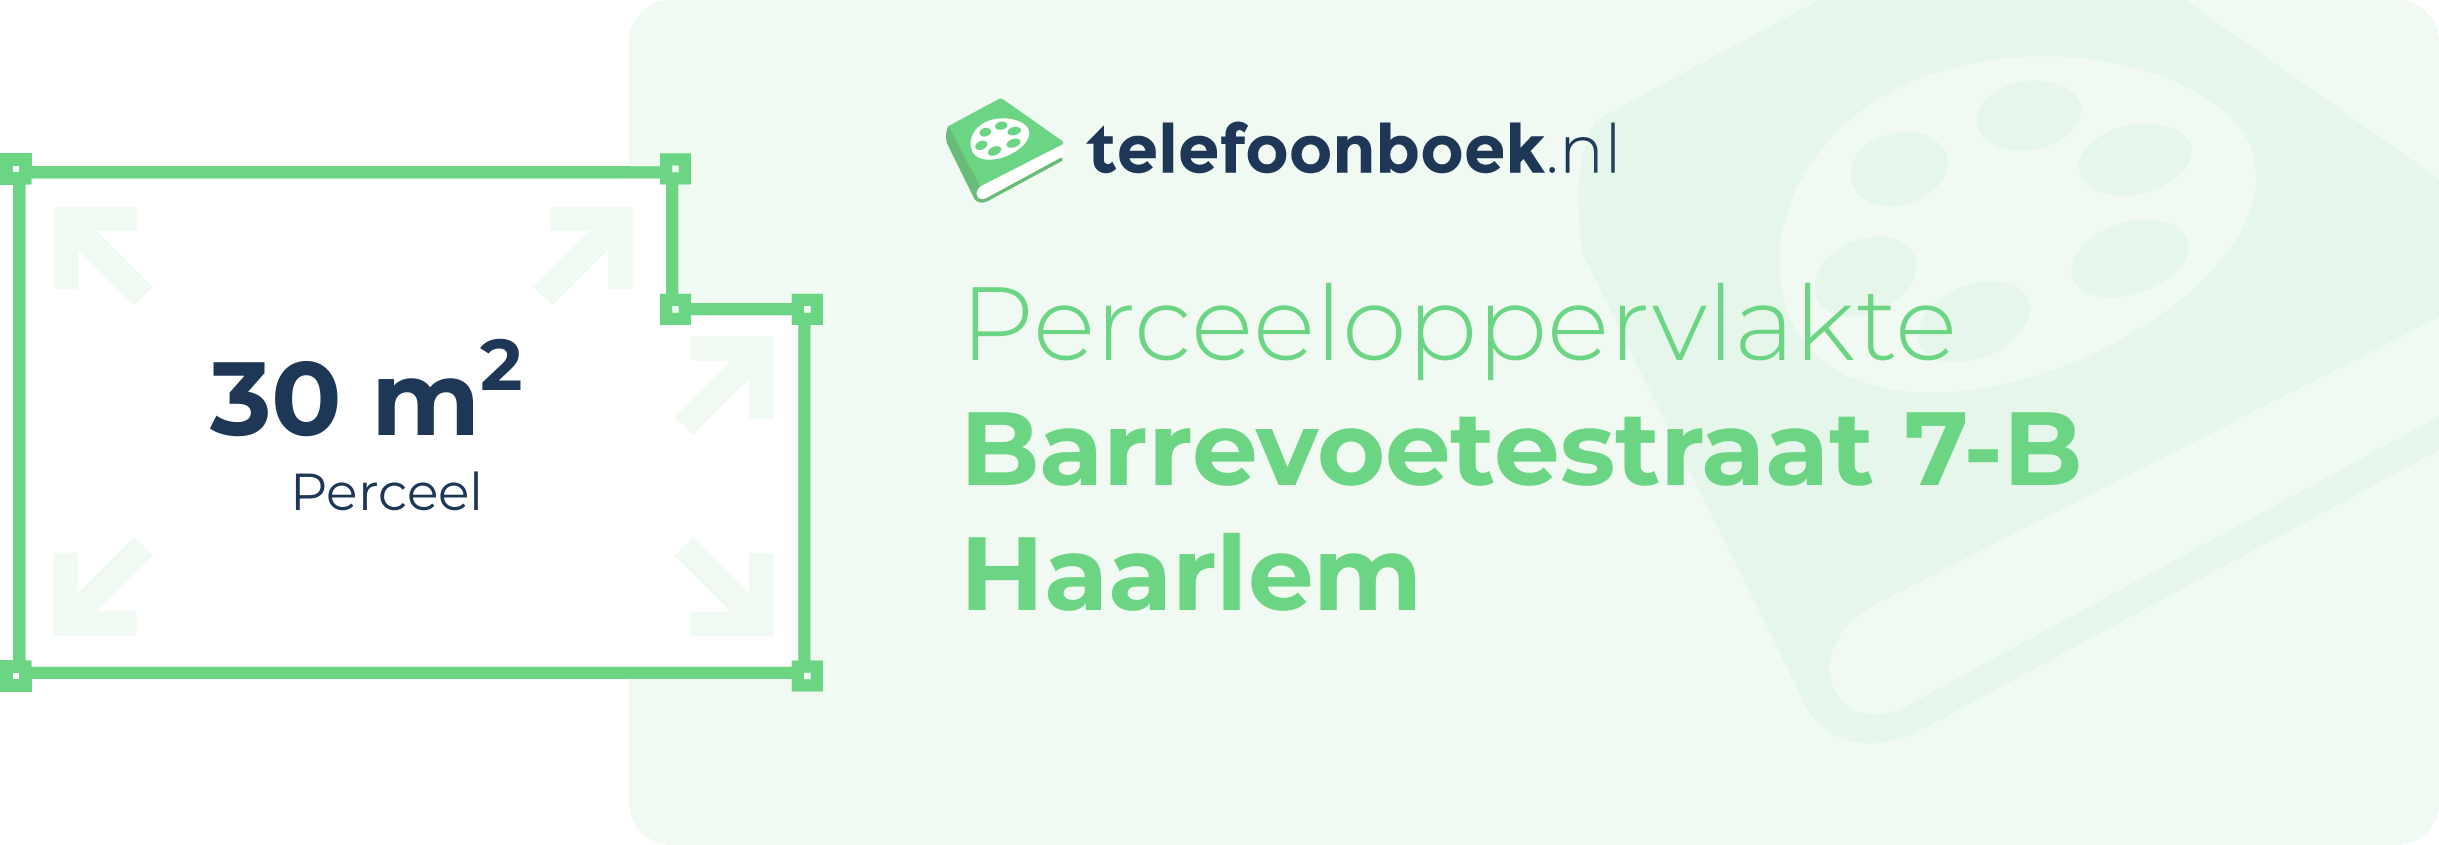 Perceeloppervlakte Barrevoetestraat 7-B Haarlem